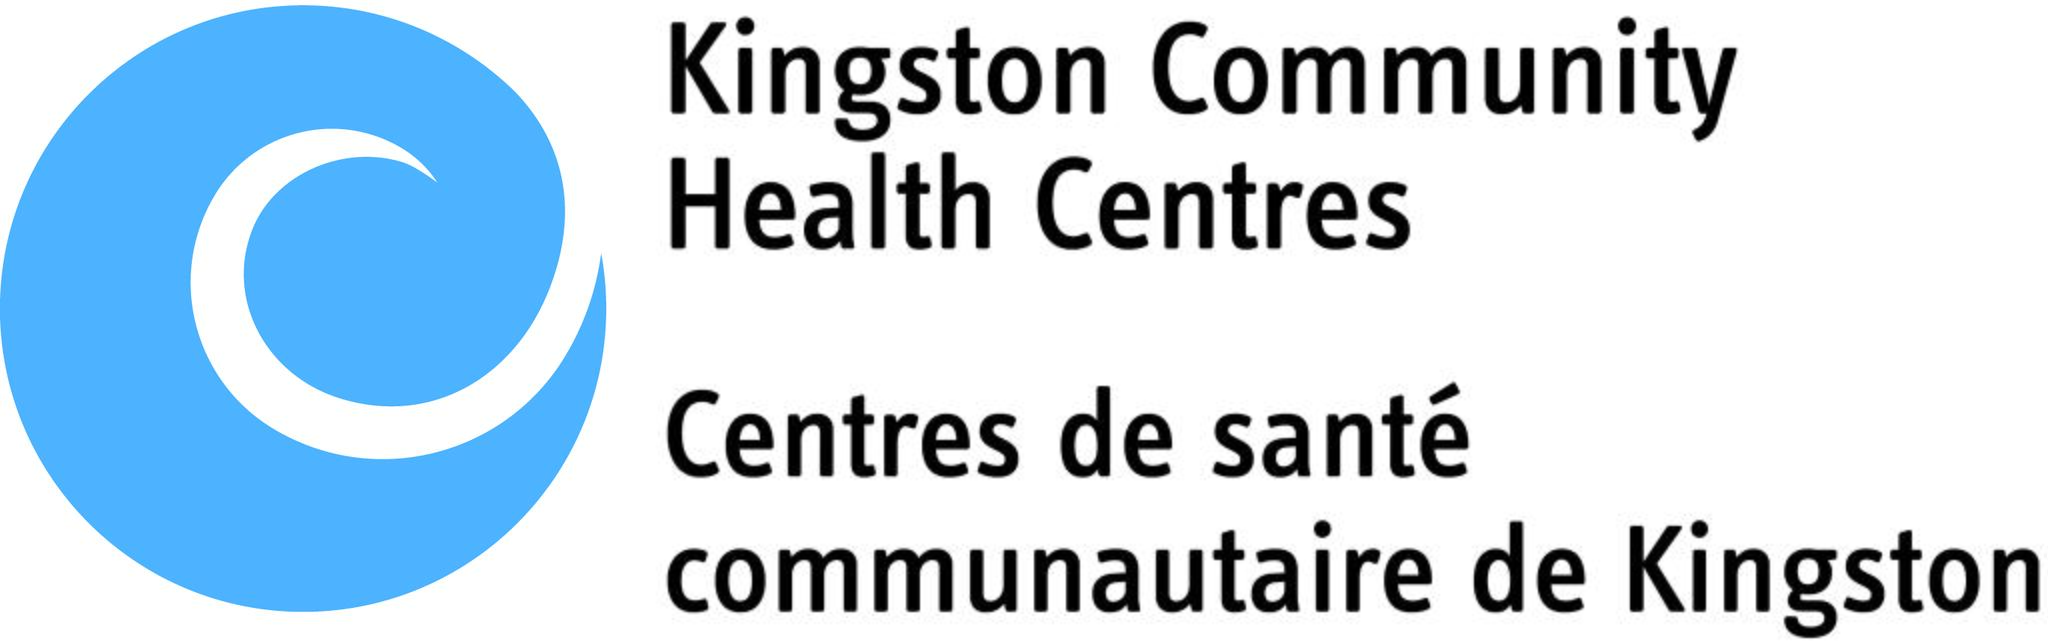 Kingston Community Health Centres Logo